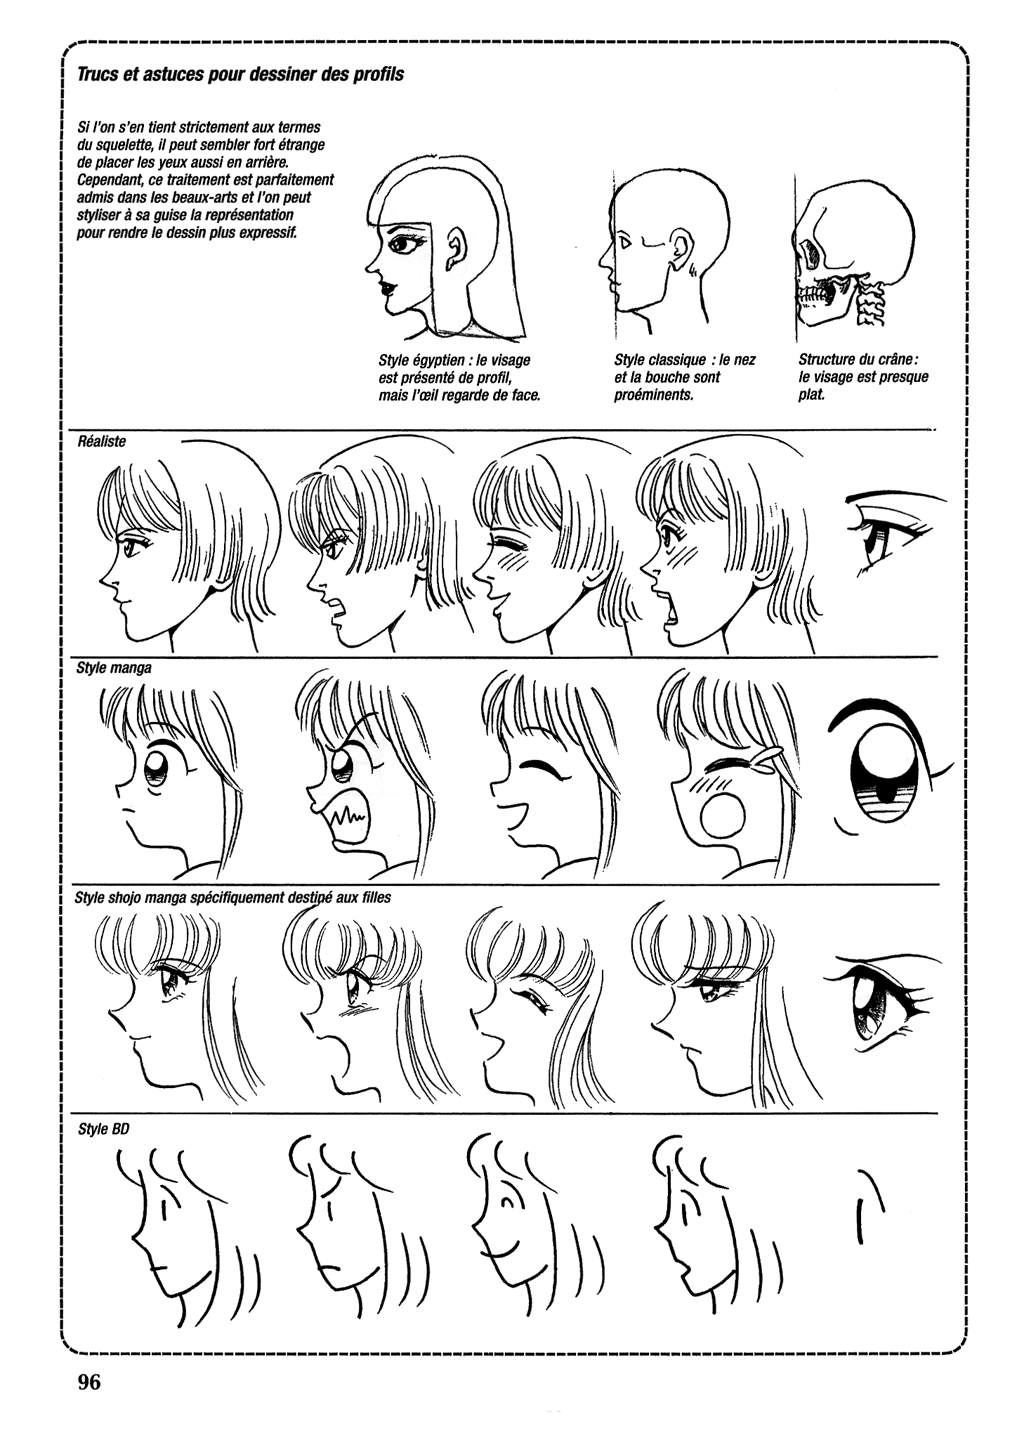 Le dessin du Manga 04 - Personnages feminin, Attitudes, Expressions numero d'image 96